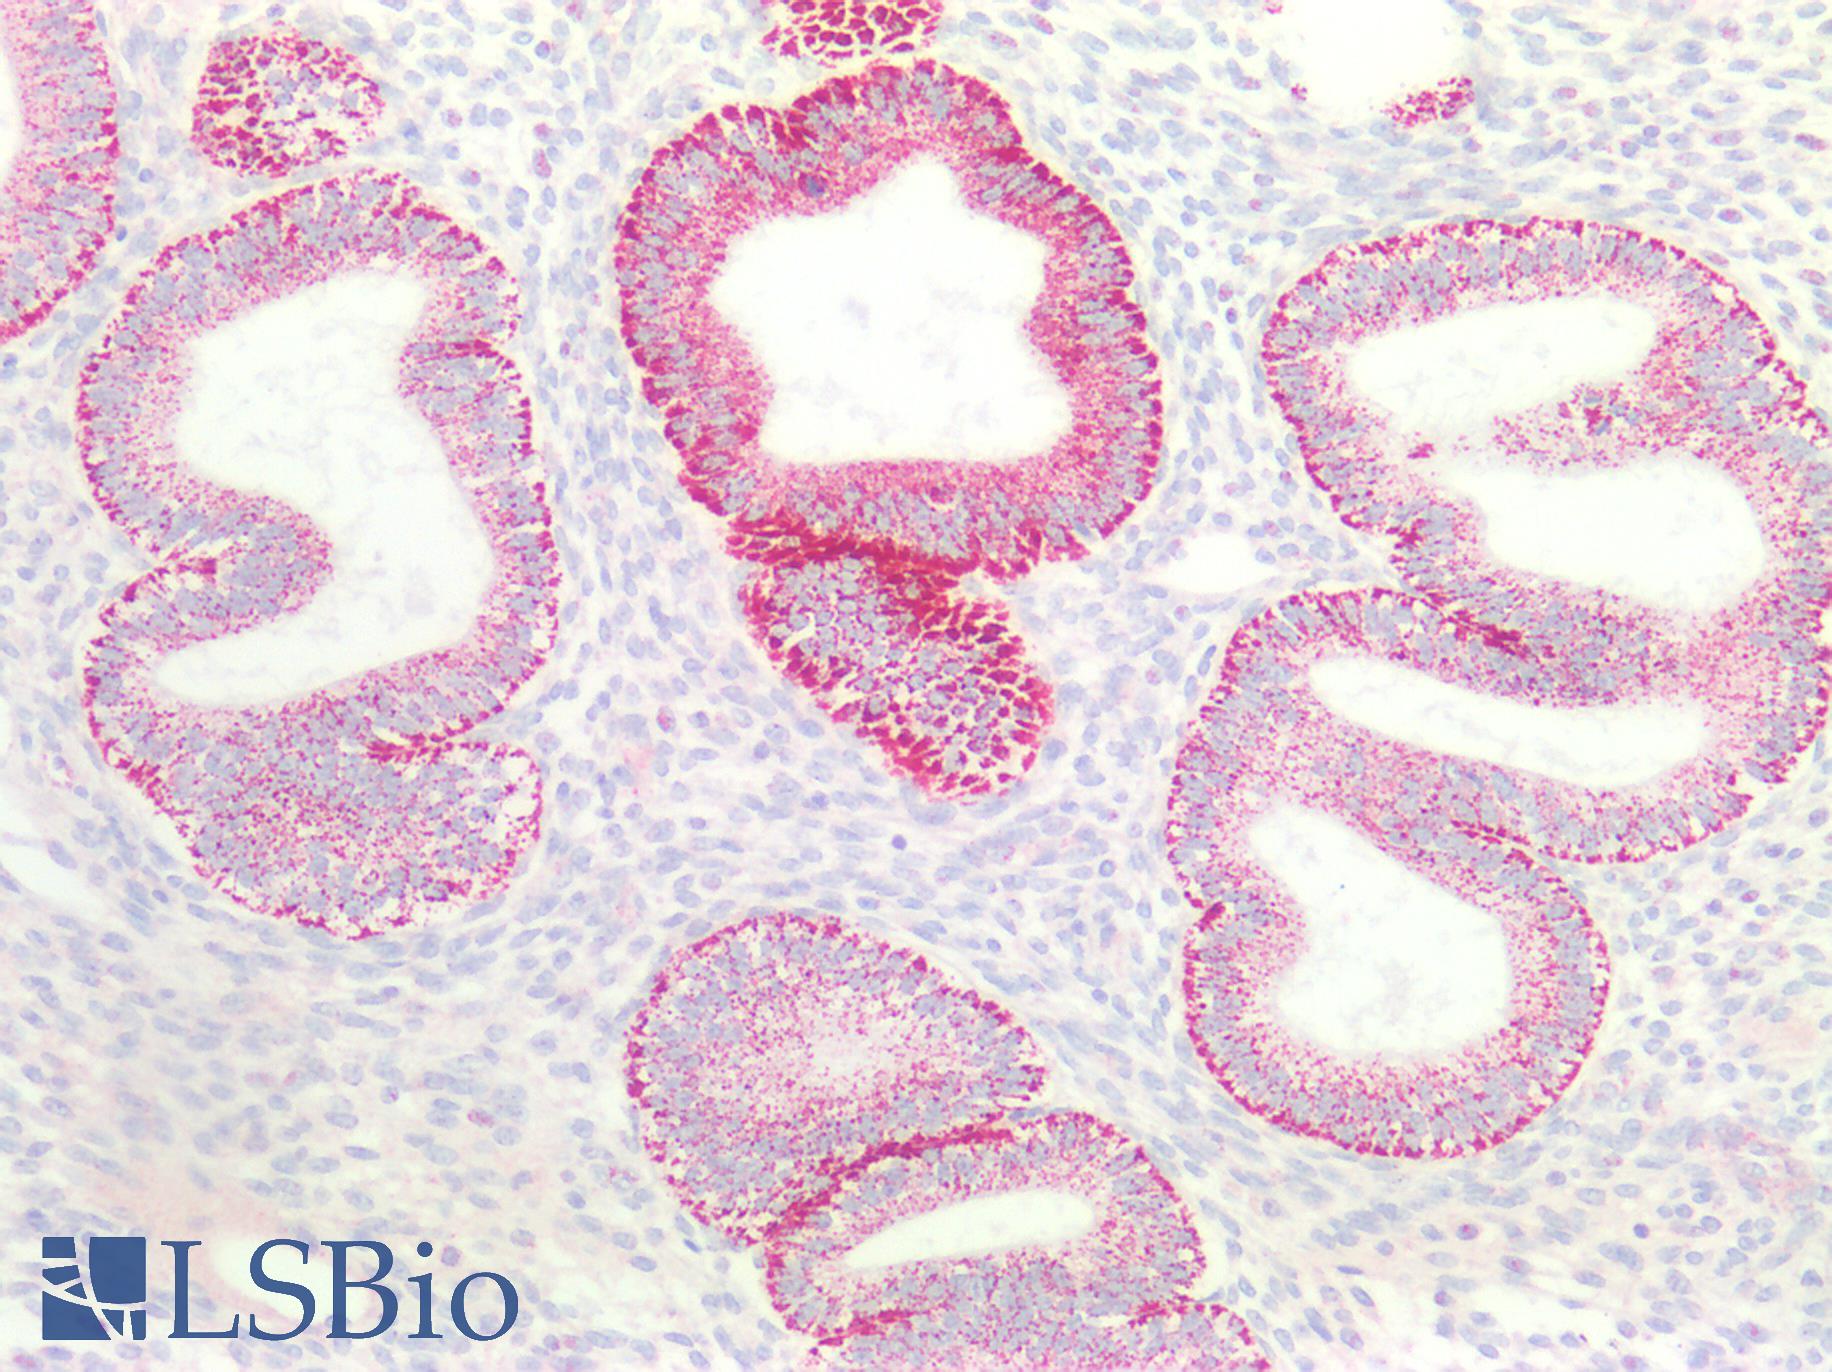 BCKDHA / BCKDE1A Antibody - Human Uterus: Formalin-Fixed, Paraffin-Embedded (FFPE)